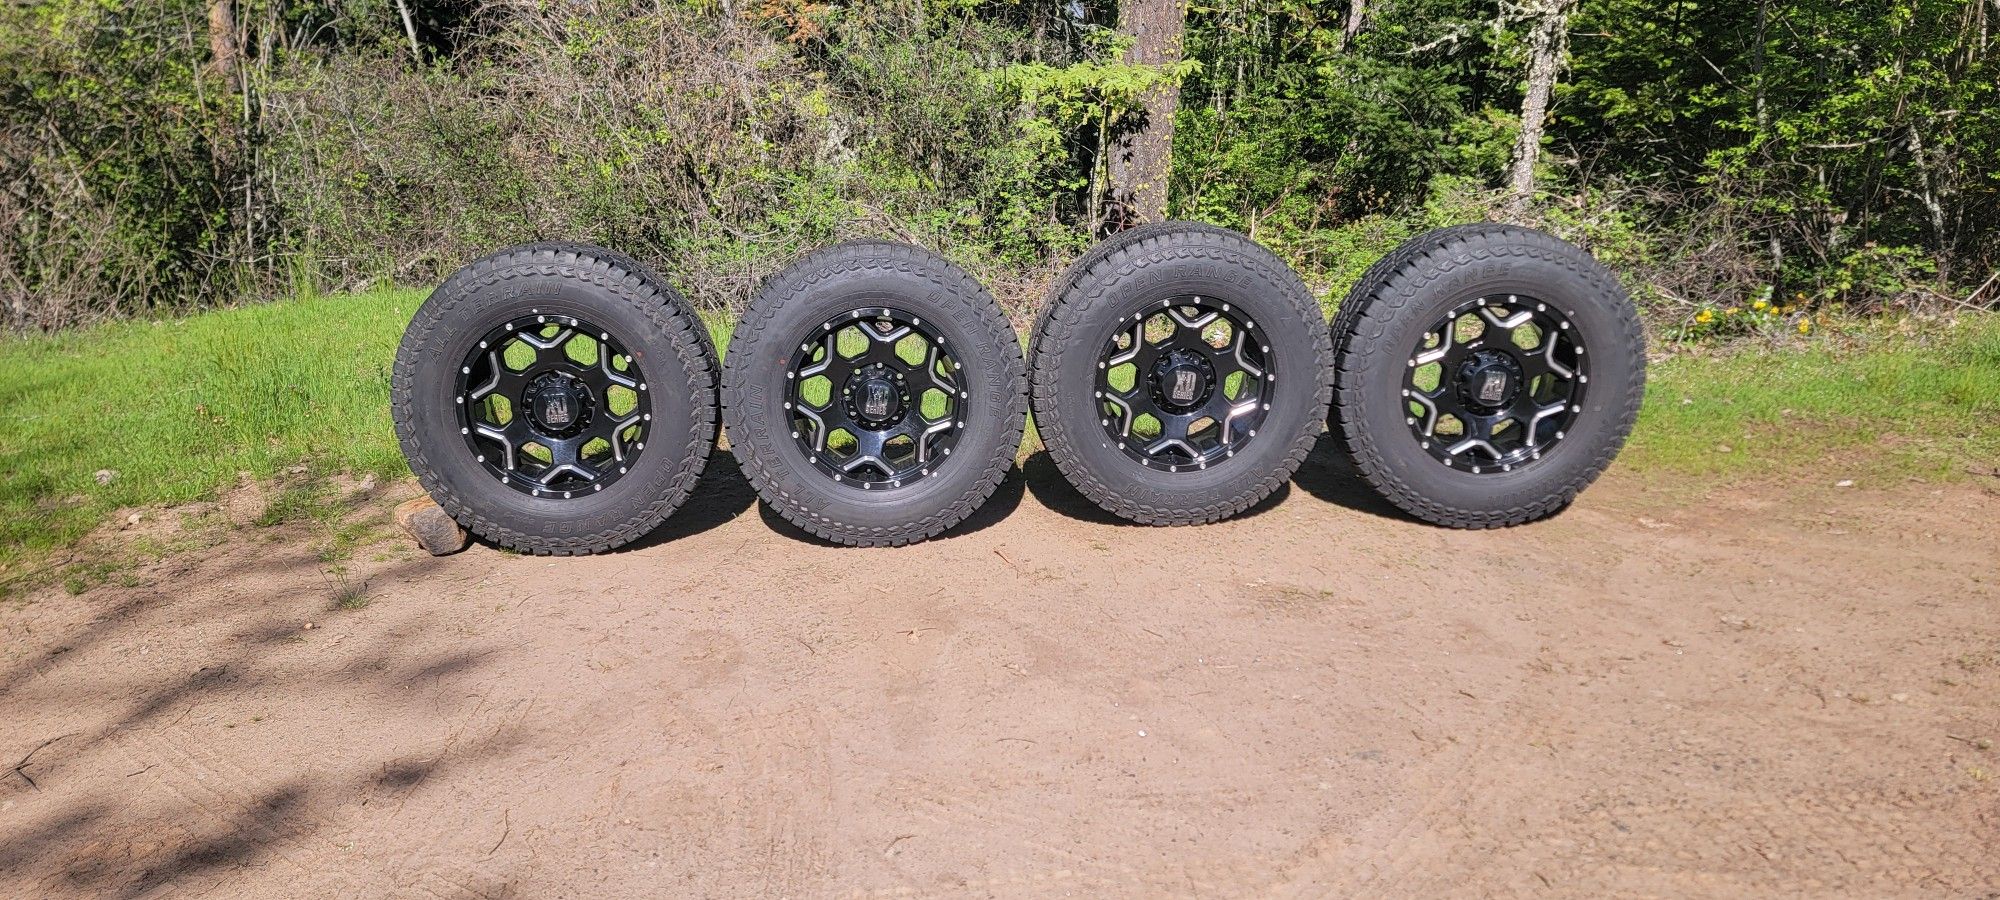 18.x9  8-6.5 Ultra Worx 803 Black Medium Offset  Wheels  With Tires